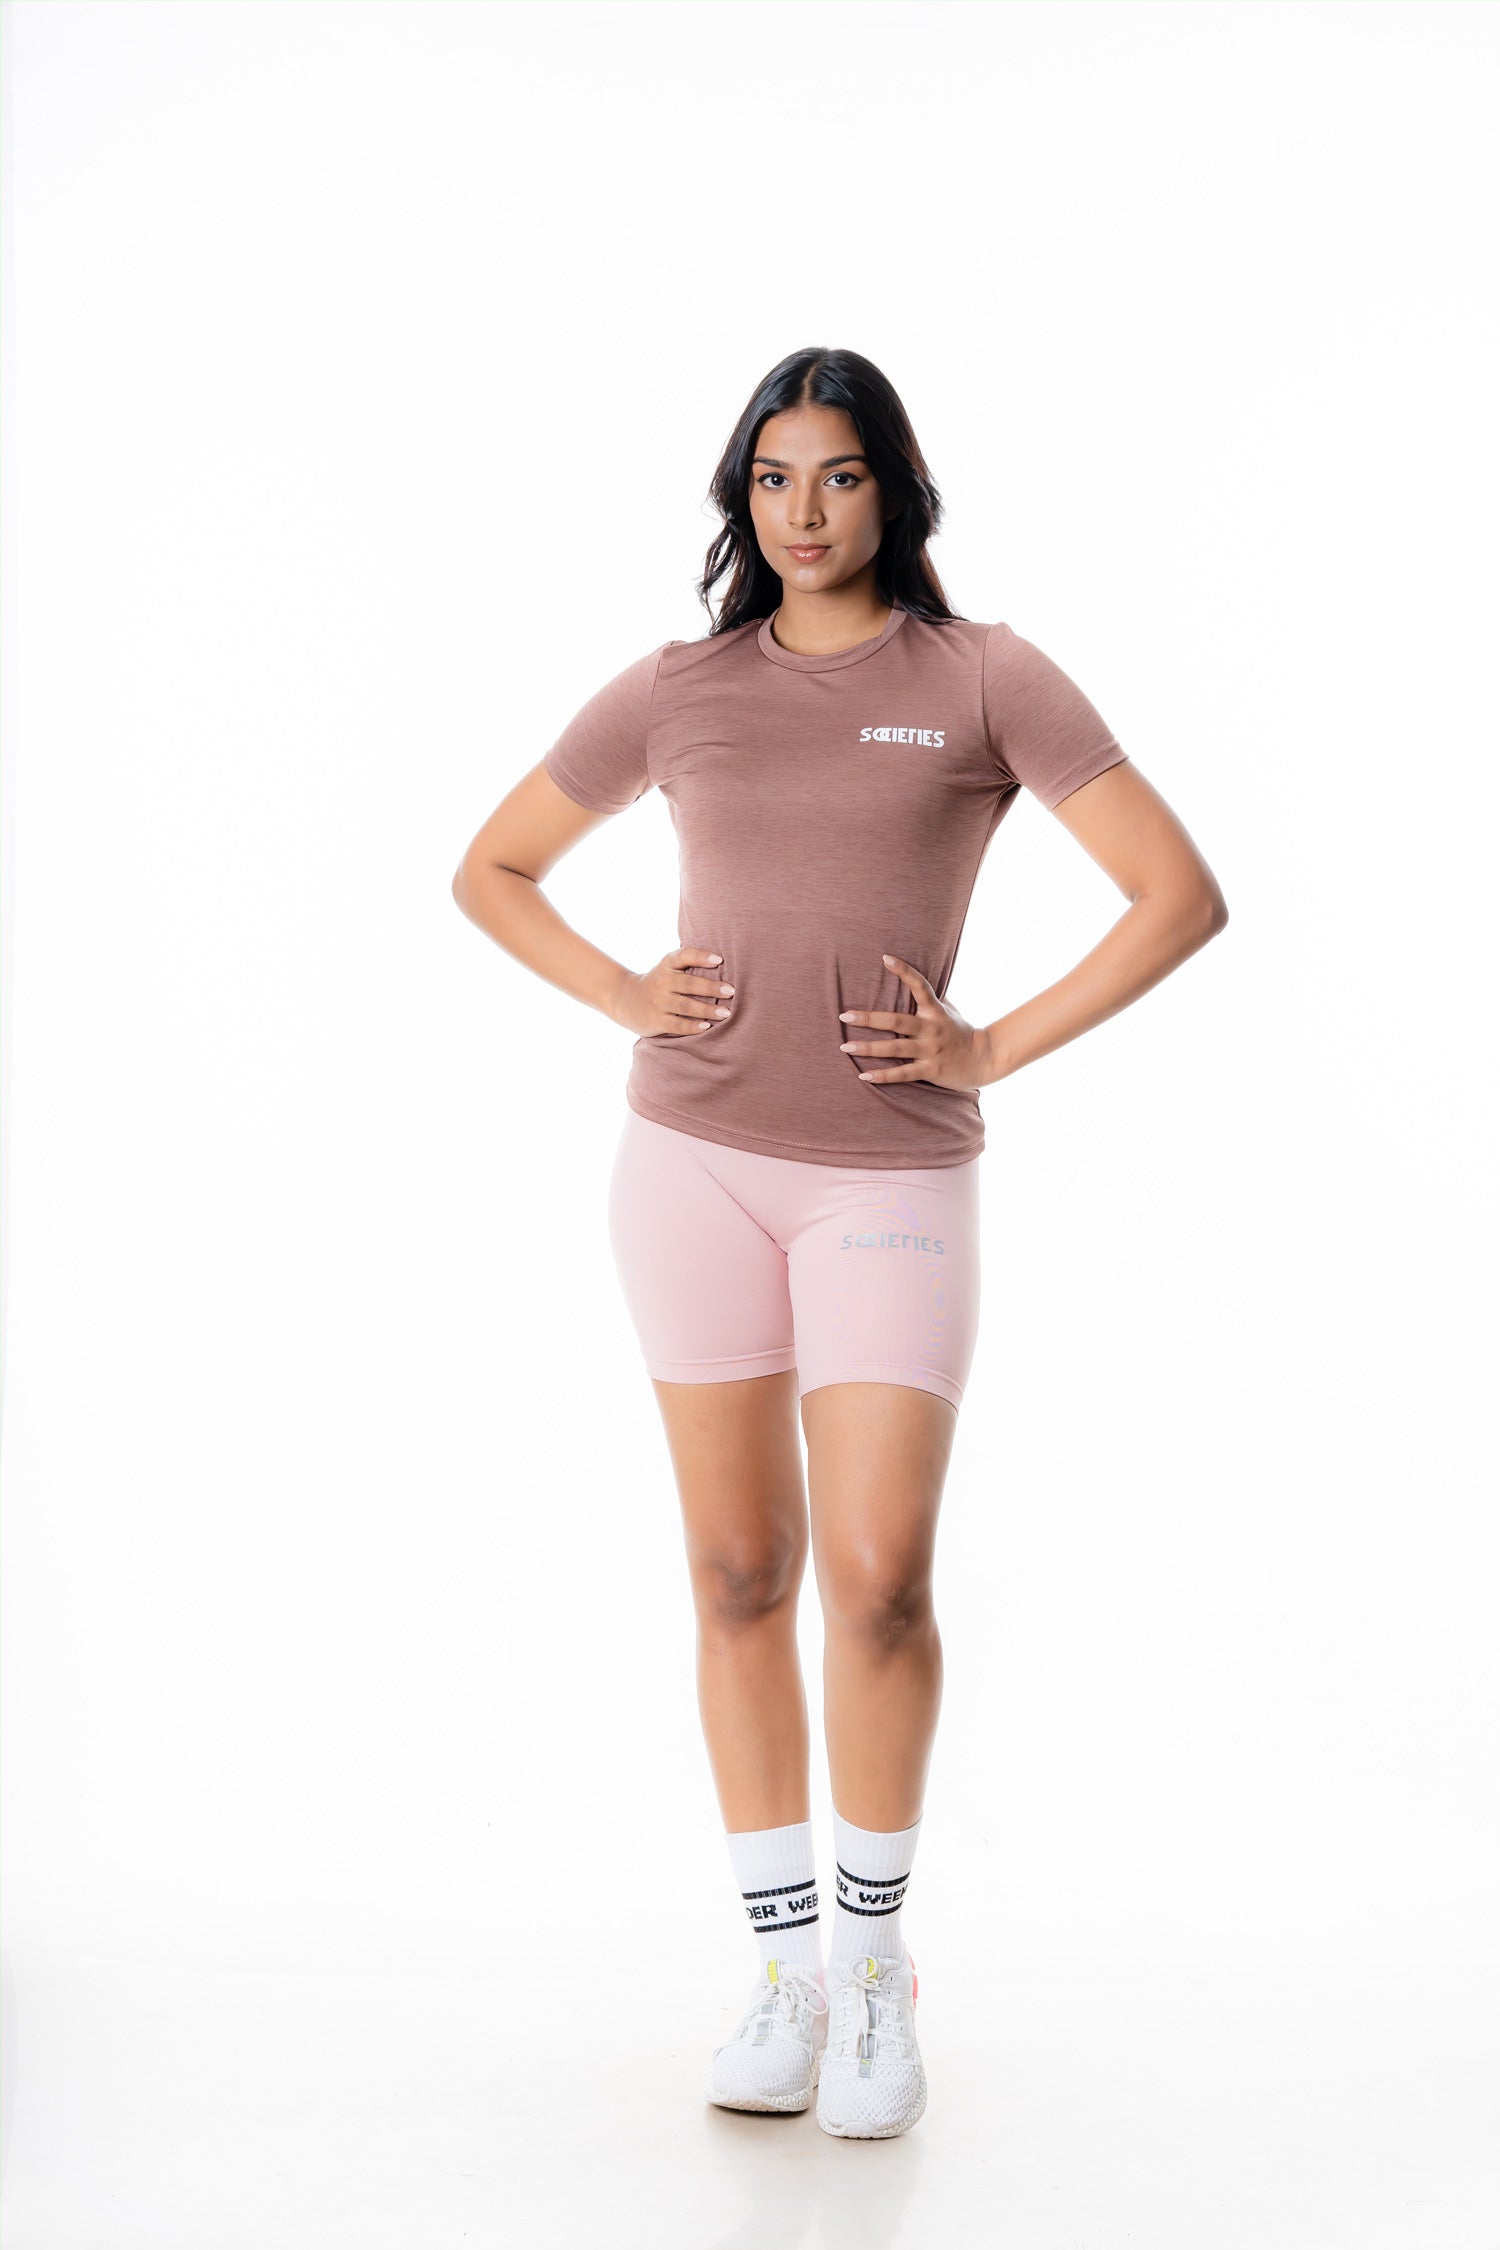 Womens Performance T-Shirt | Societies Clothing Sri Lanka | Activewear | Gym Clothes | Gym Wear | Gym Comfort Wear 